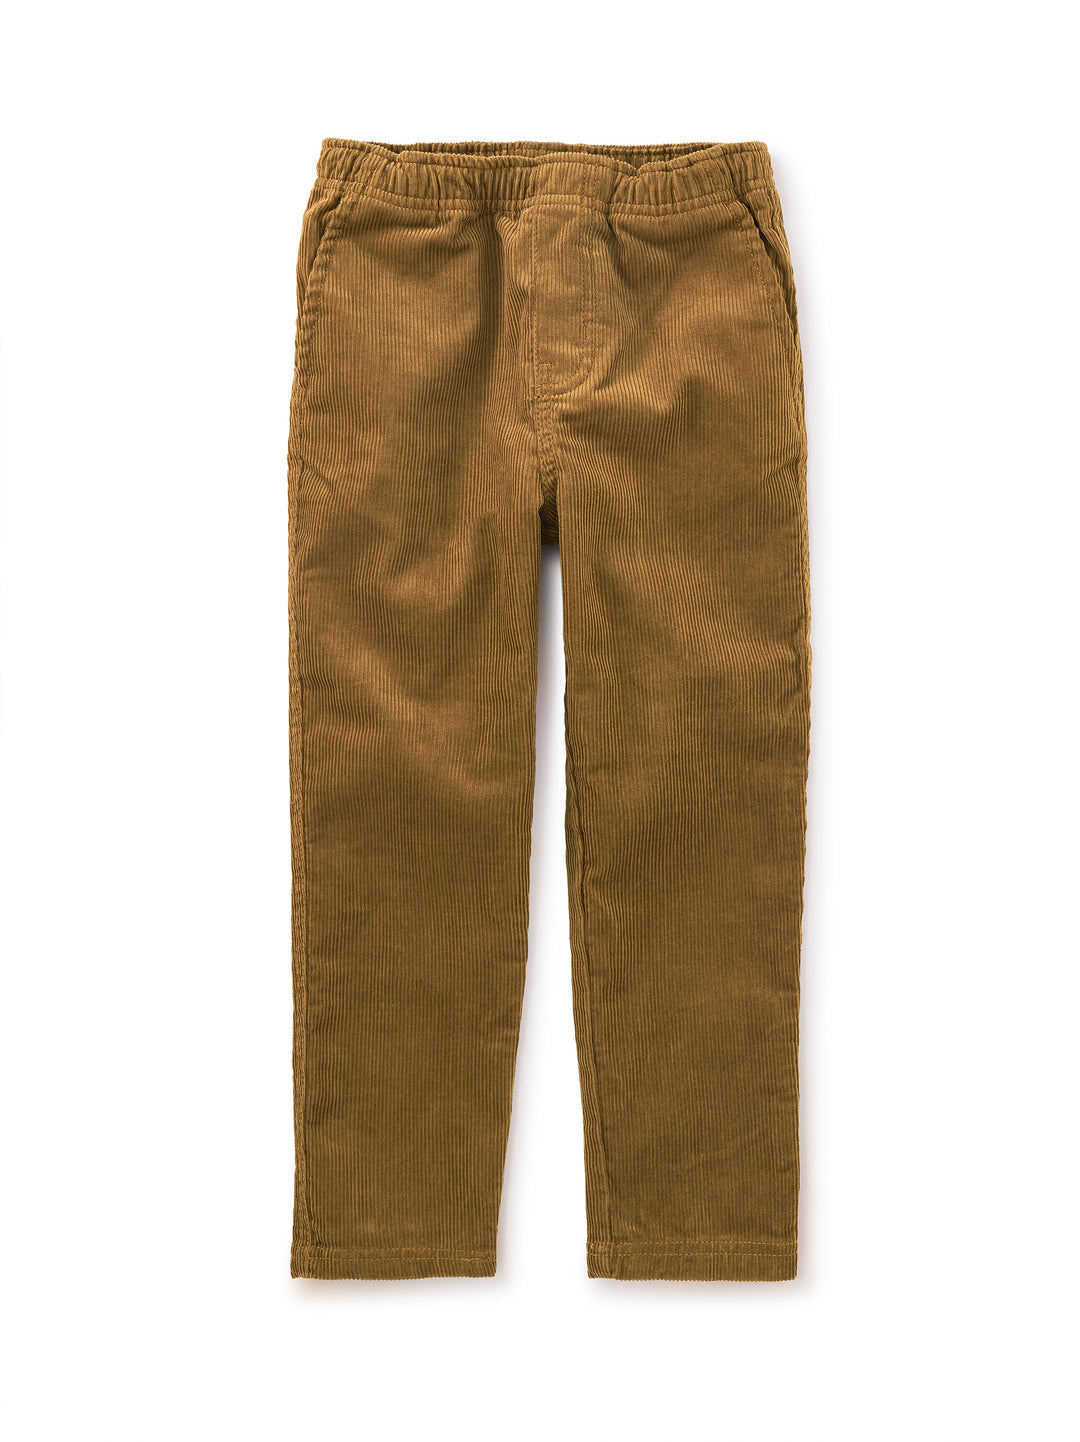 Tea Collection Corduroy Pants, Raw Umber |Mockingbird Baby & Kids